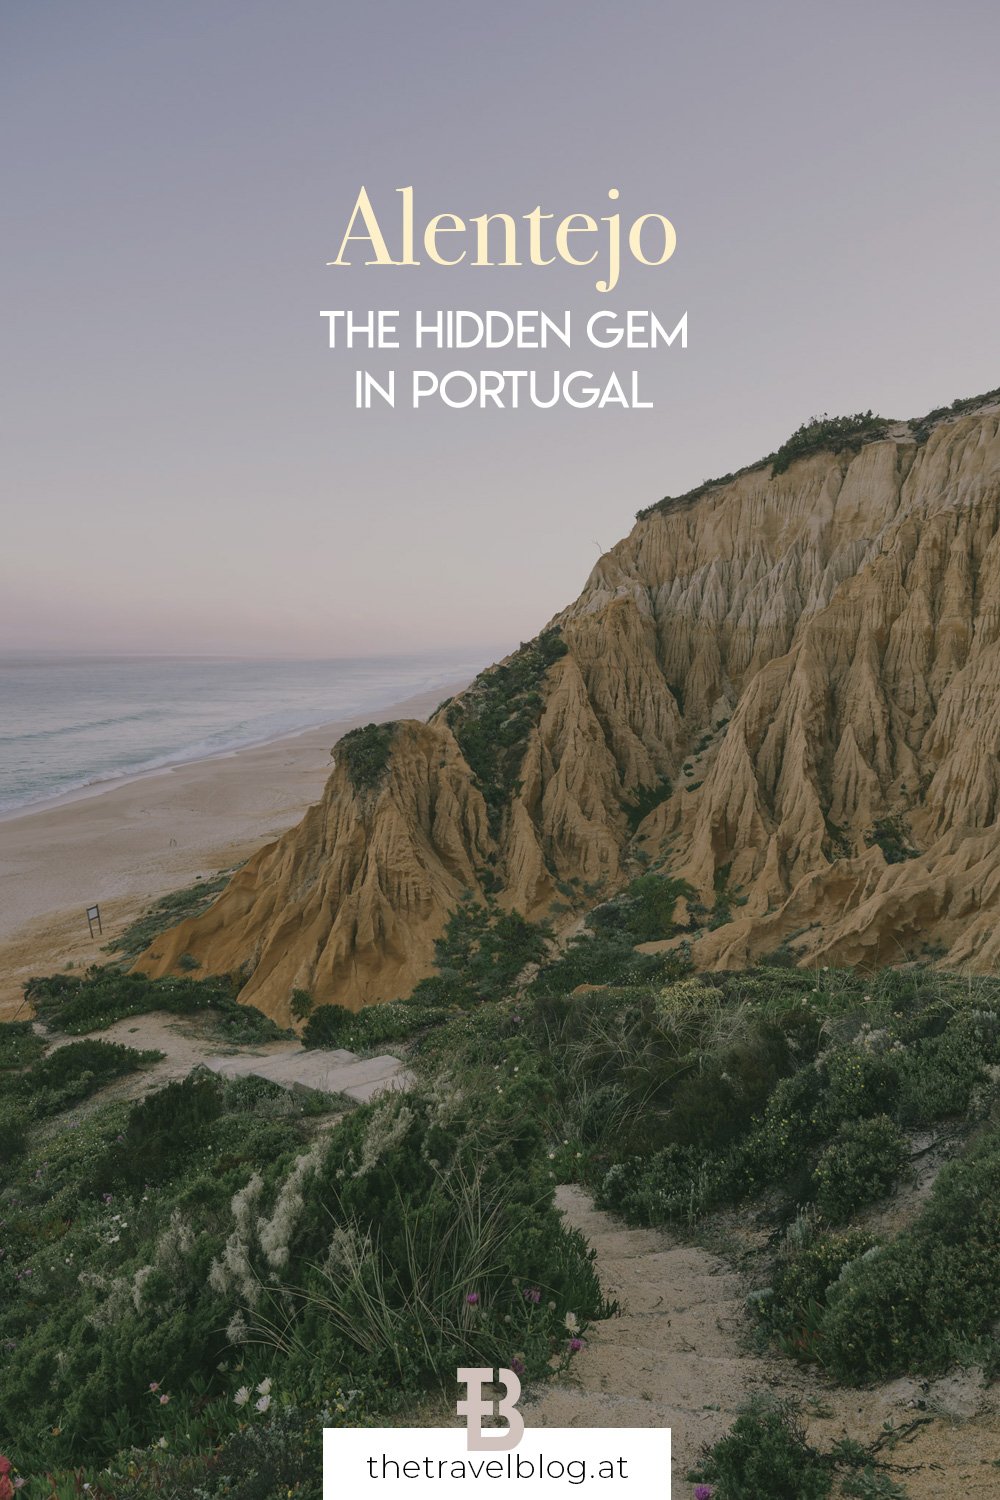 Alentejo: Travel guide for this hidden gem in Portugal